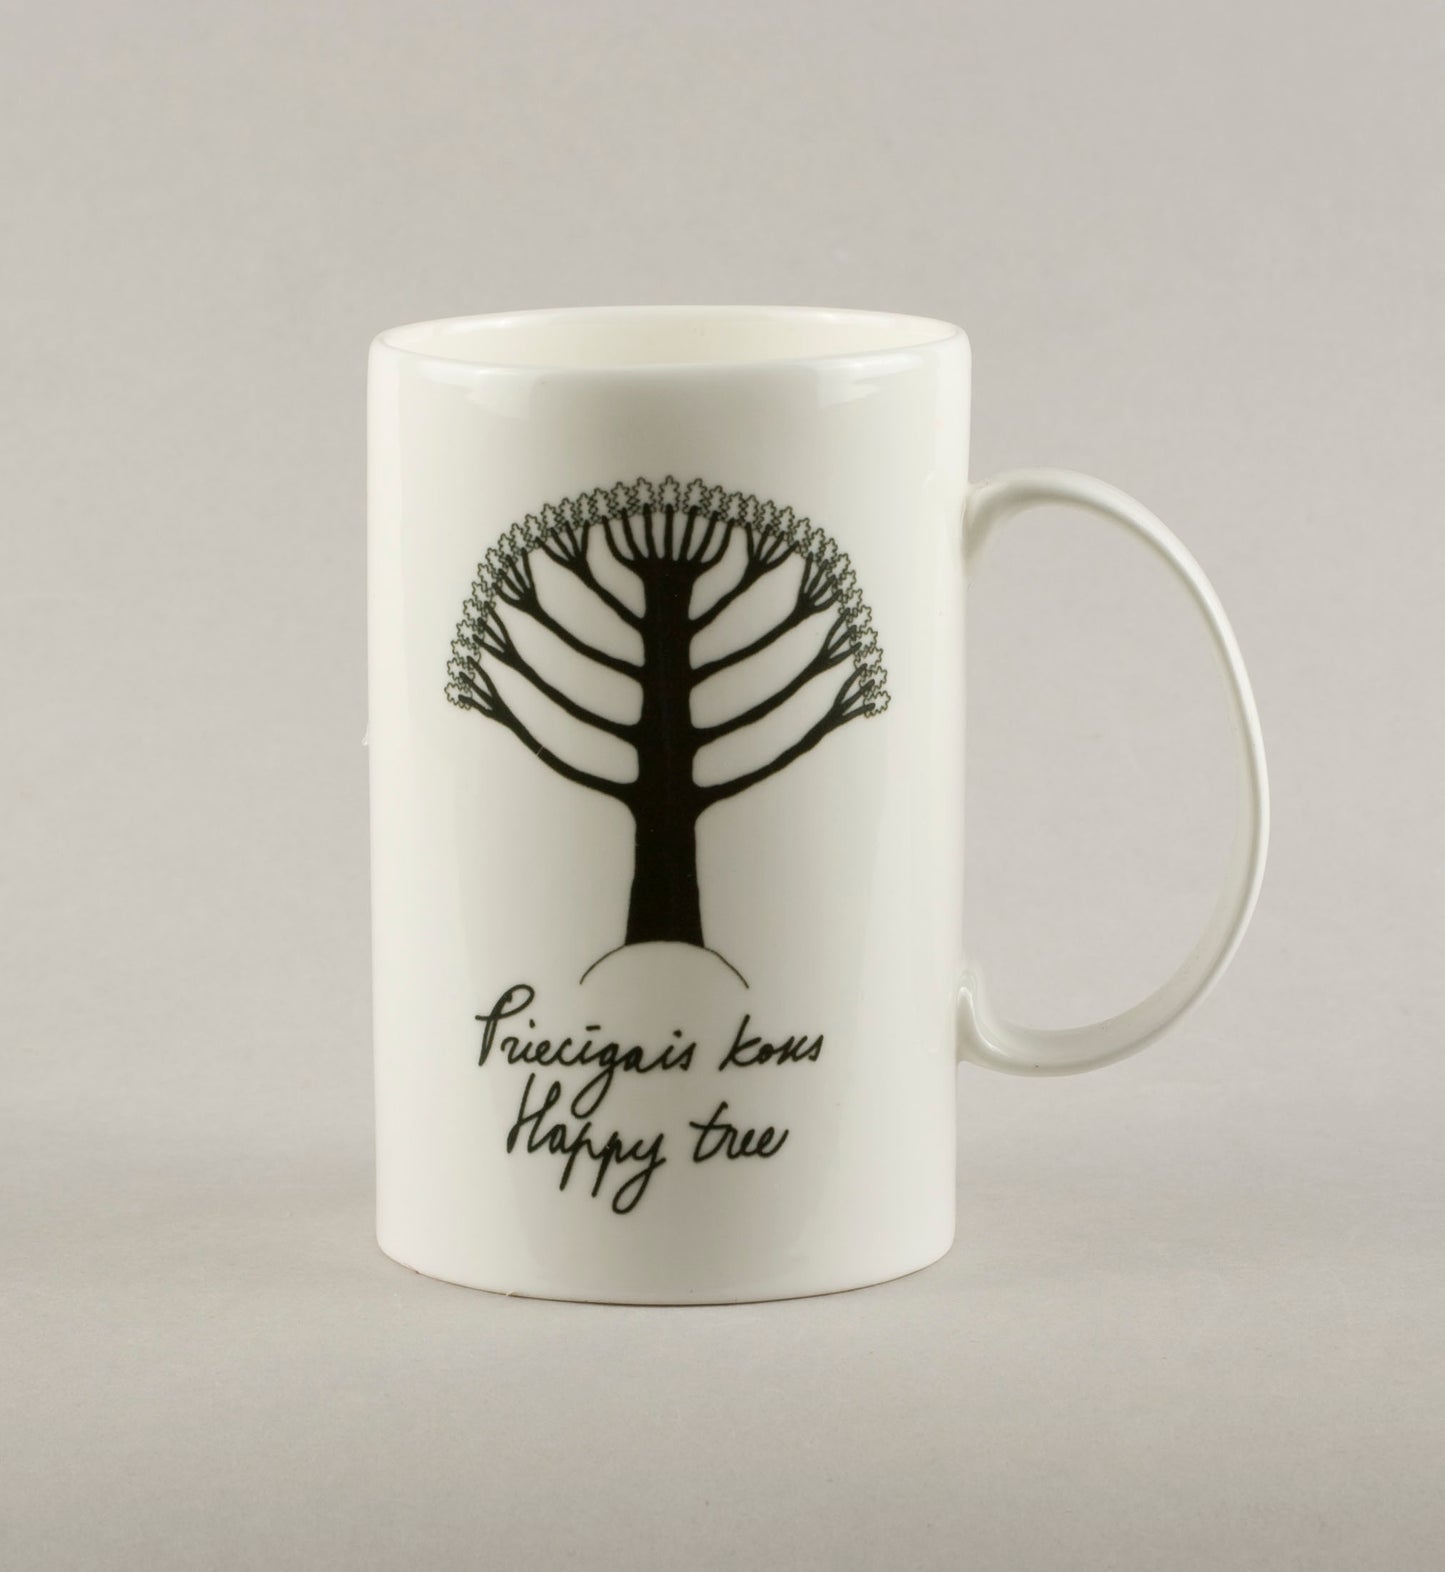 Happy tree. Medium Mug